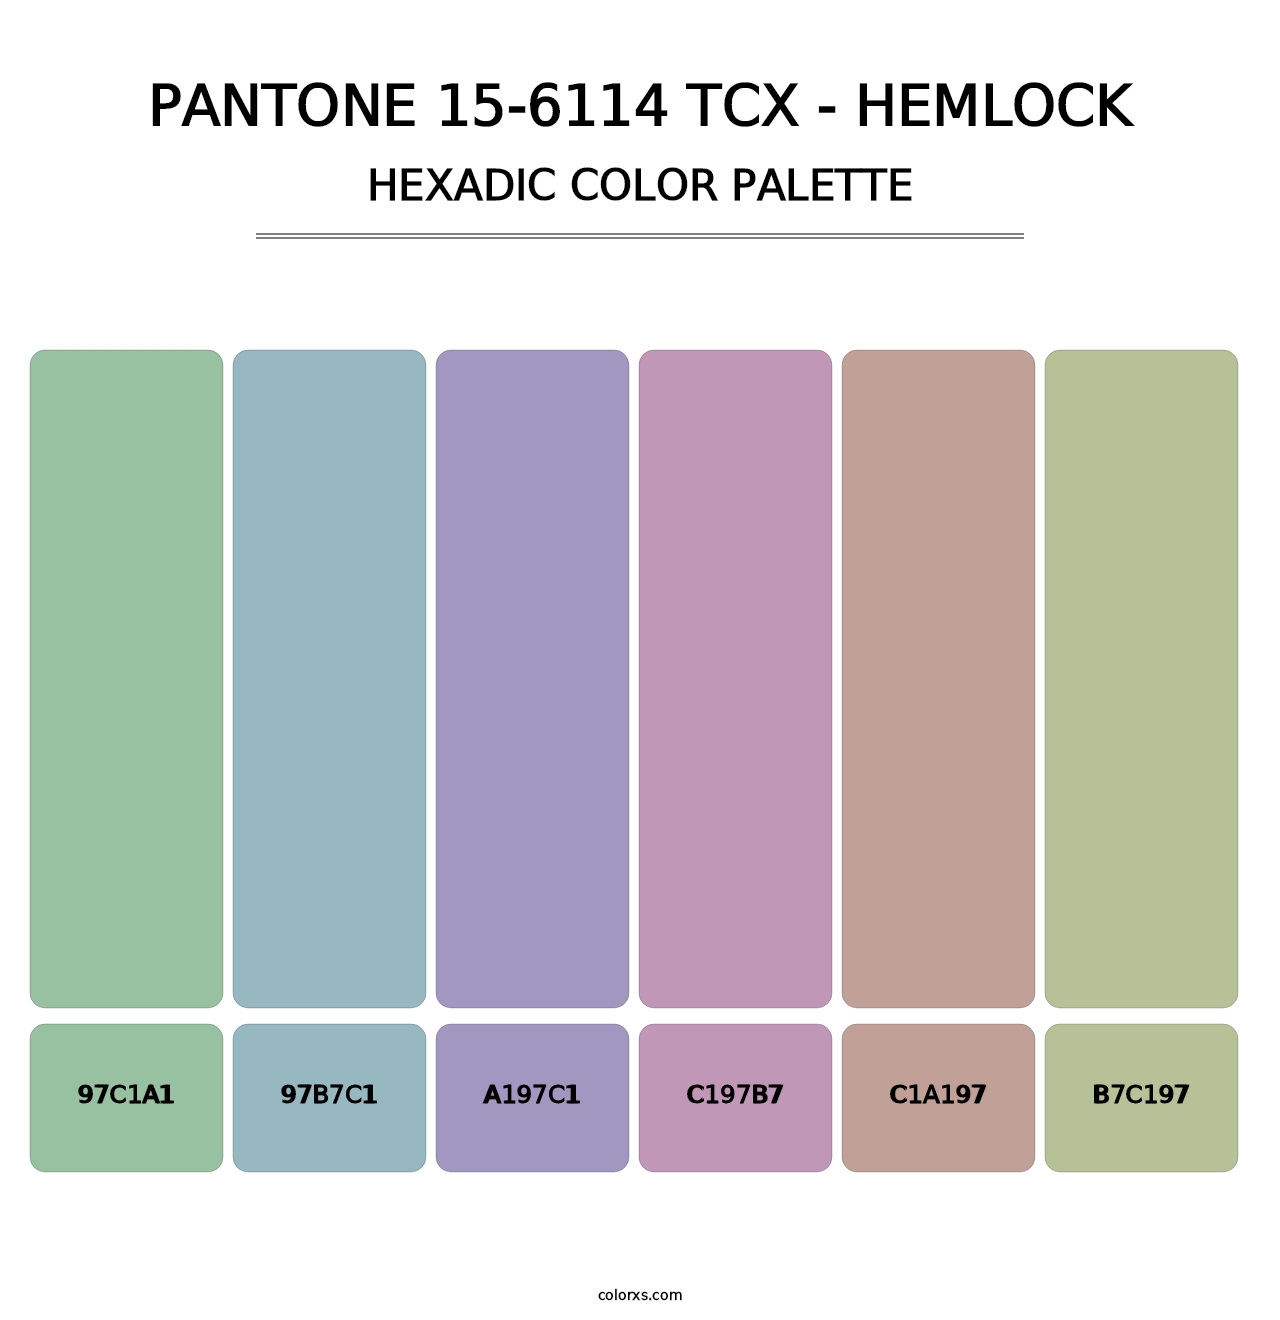 PANTONE 15-6114 TCX - Hemlock - Hexadic Color Palette